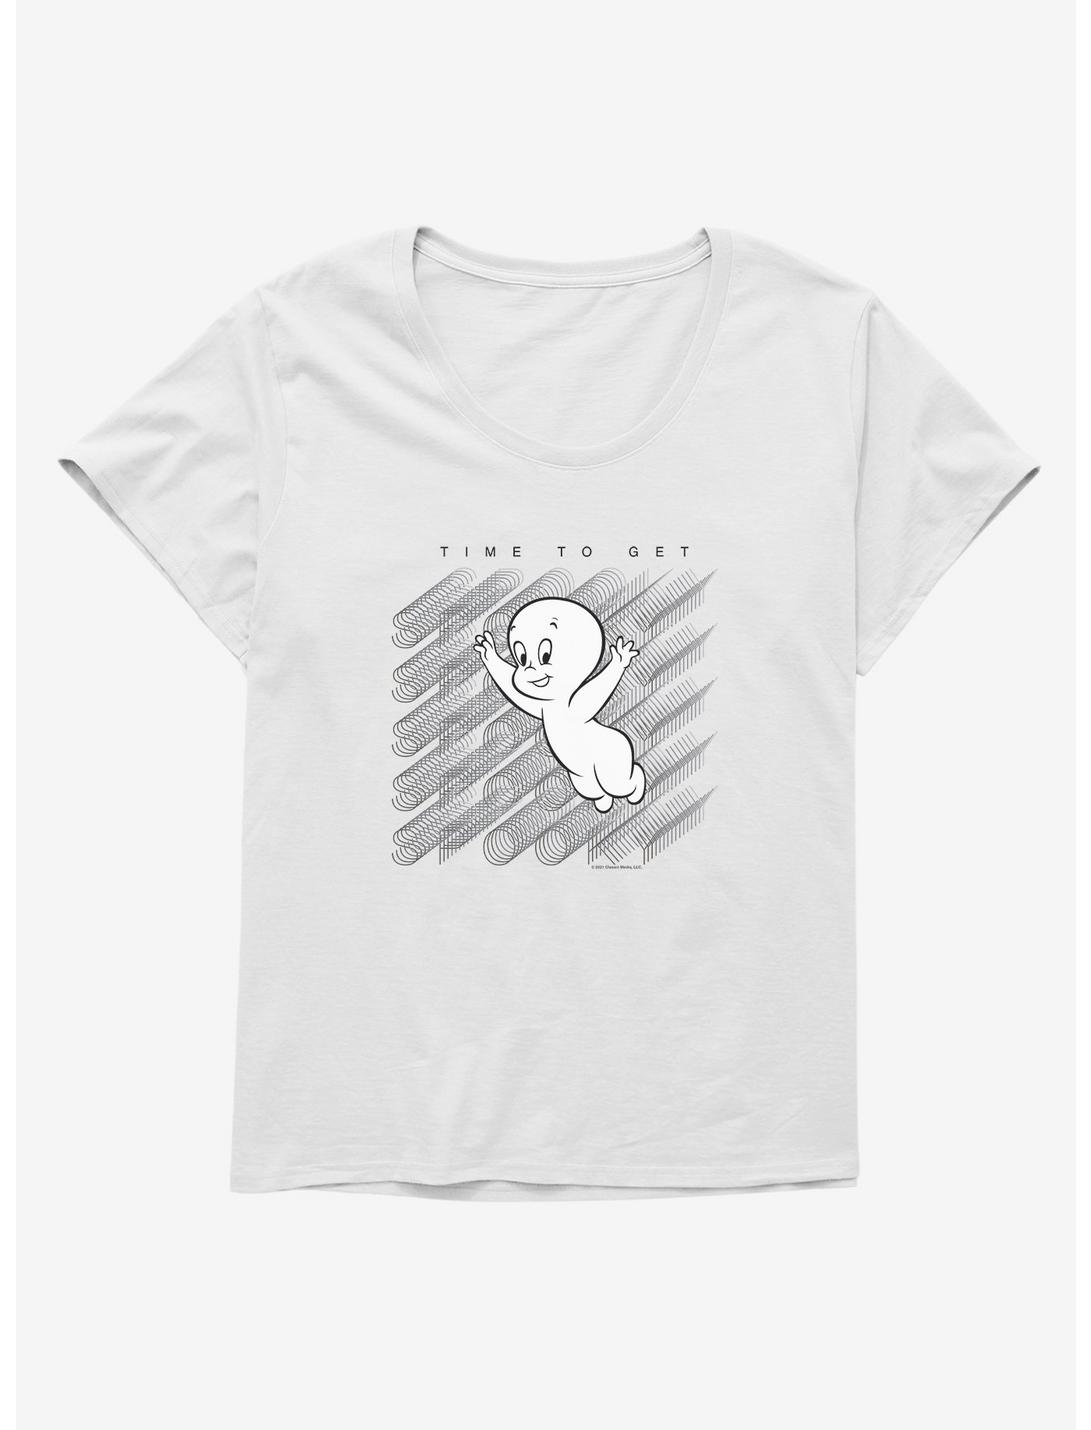 Casper The Friendly Ghost Virtual Raver Spooky Time Girls T-Shirt Plus Size, WHITE, hi-res